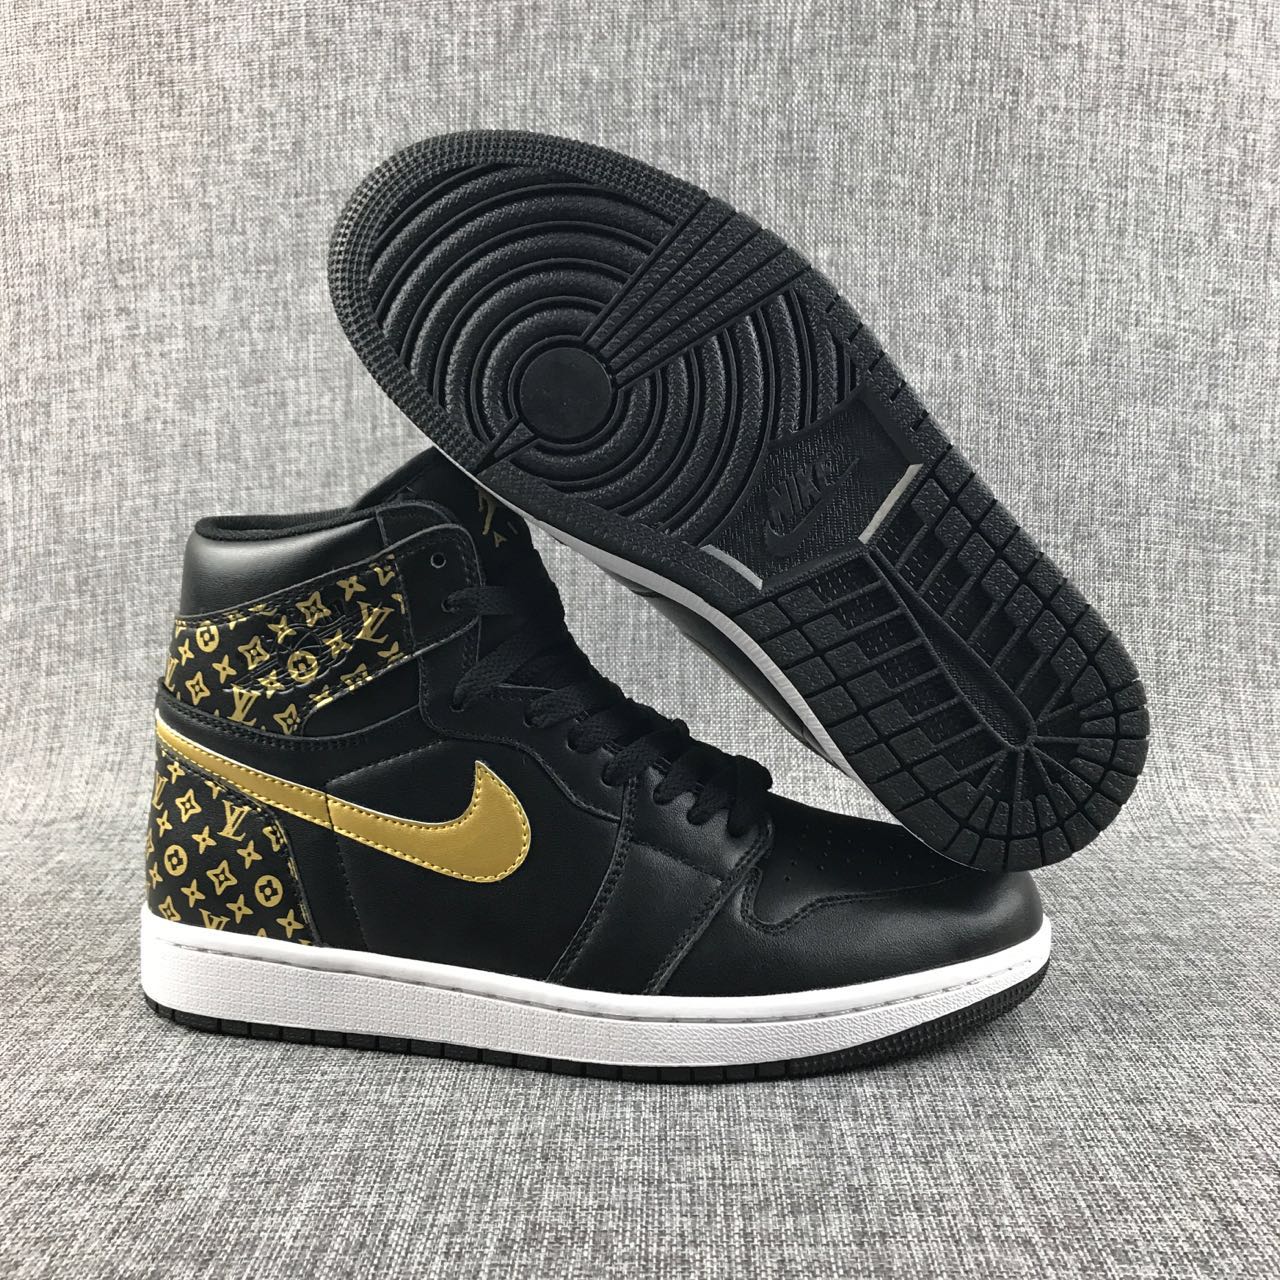 New Air Jordan 1 Print Black Gold Shoes